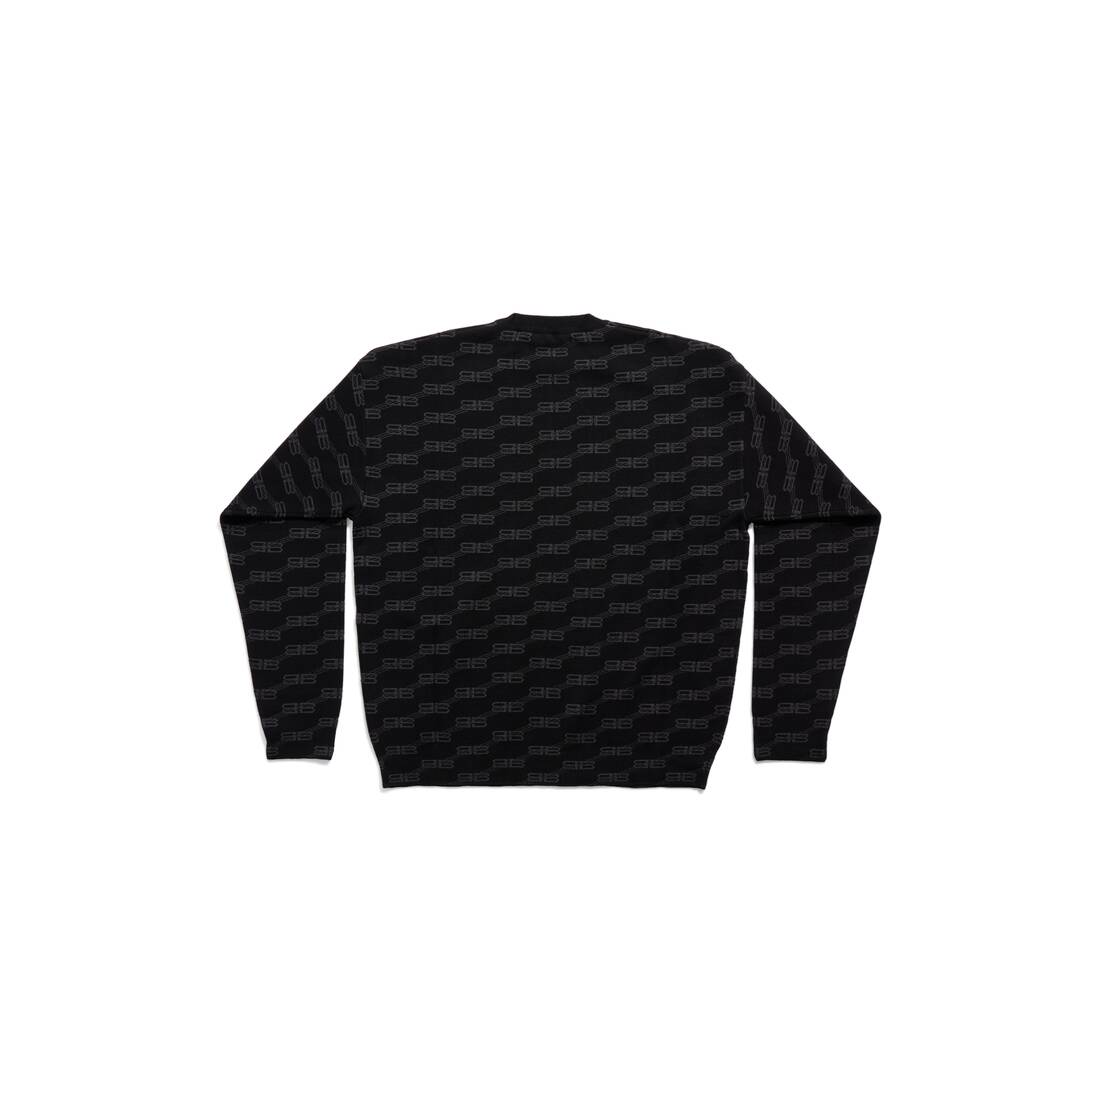 Louis Vuitton Pop Monogram Damier Knit Jacket